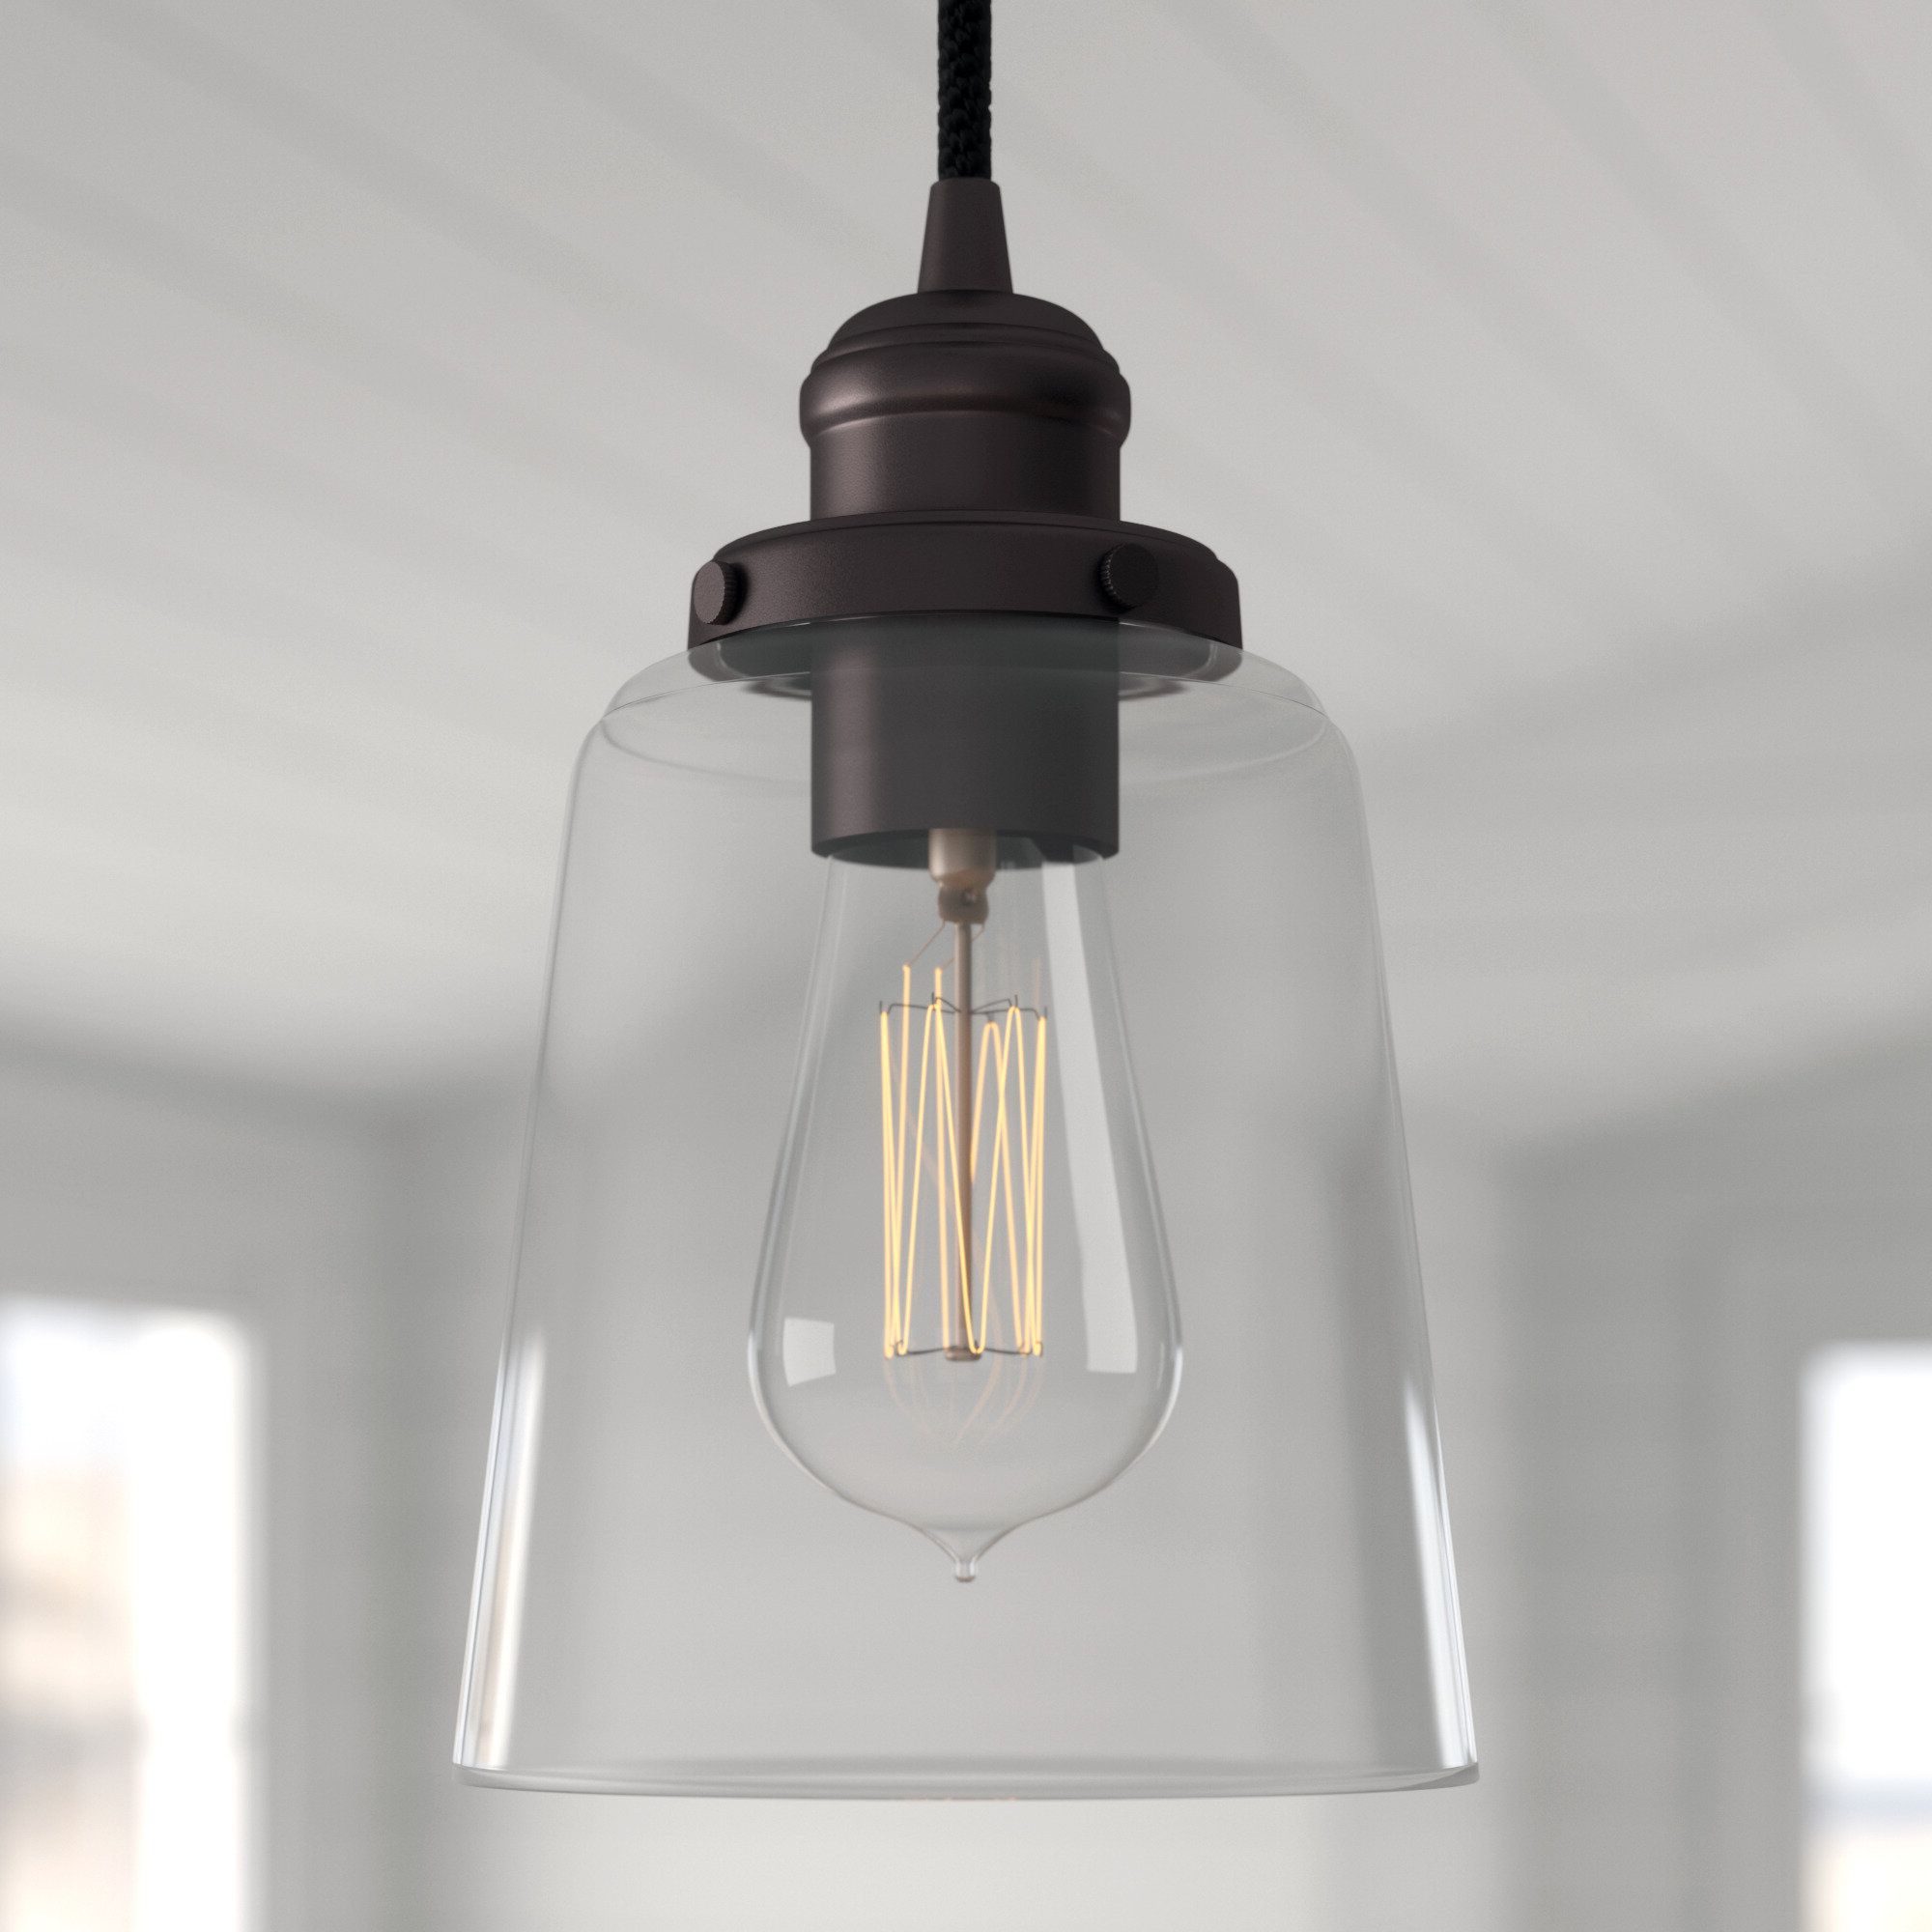 2019 Bundaberg 1 Light Single Bell Pendants In 1 Light Cone Pendant (View 13 of 25)